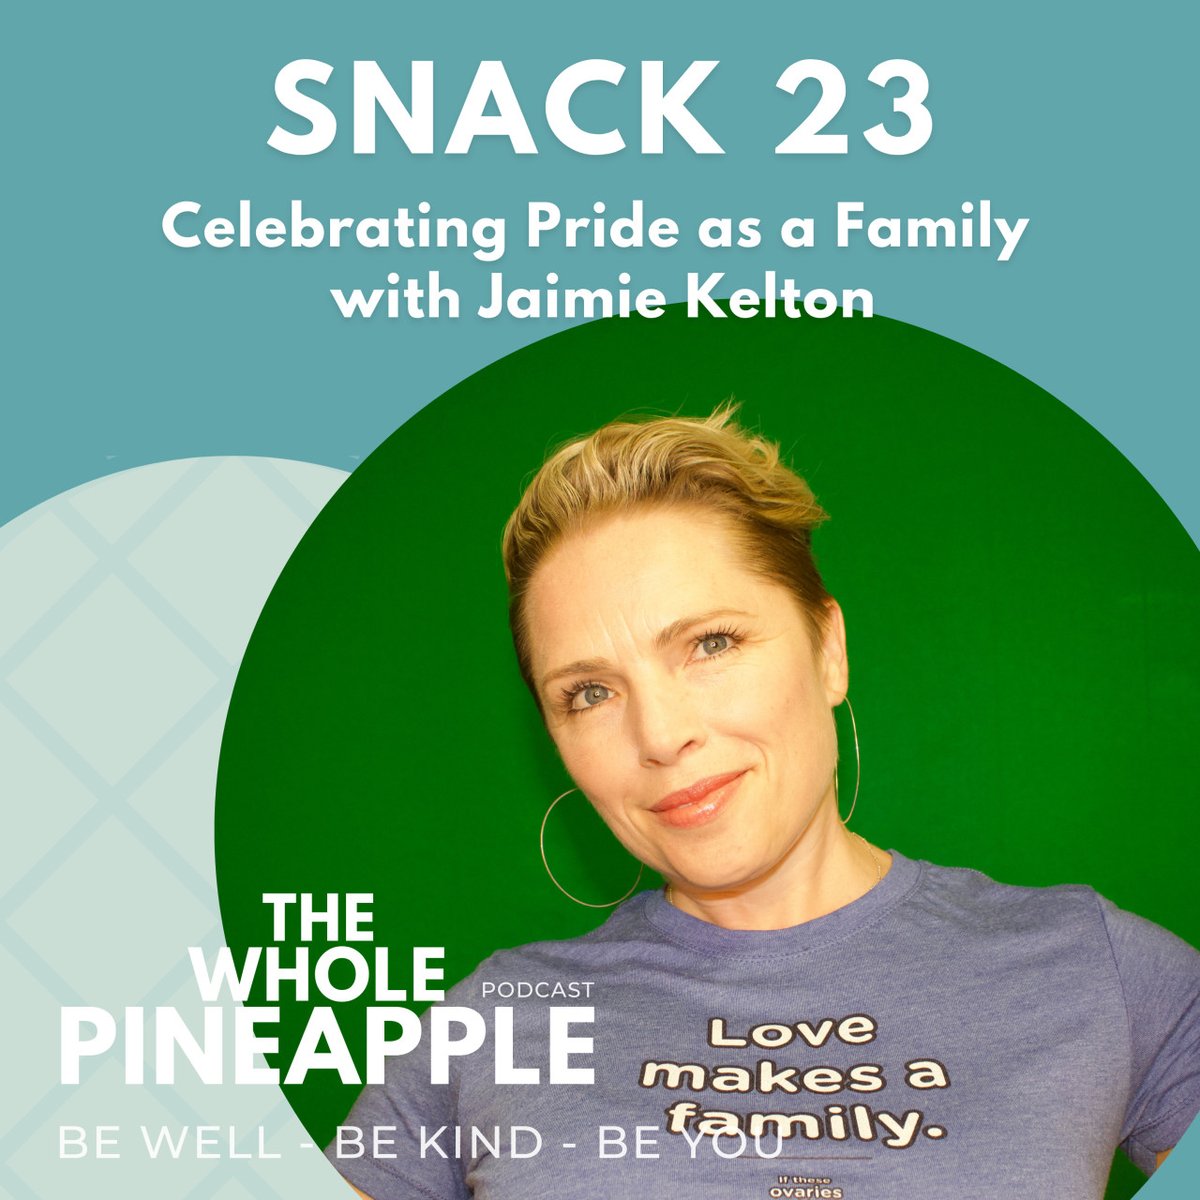 Snack 23: Celebrating Pride as a Family wit...@Jaimiekelton #LGBTQIA
@ovariestalk  @Familyequality @Seattlepridefest @Seattlepride @SRMFertility 

#OvariesTalk #ITOCT #QueerFamily #HappyPride #LoveWins #CelebratePride #SeattlePride #QueerPodcast #FertilityPodcast #WellnessPodcast